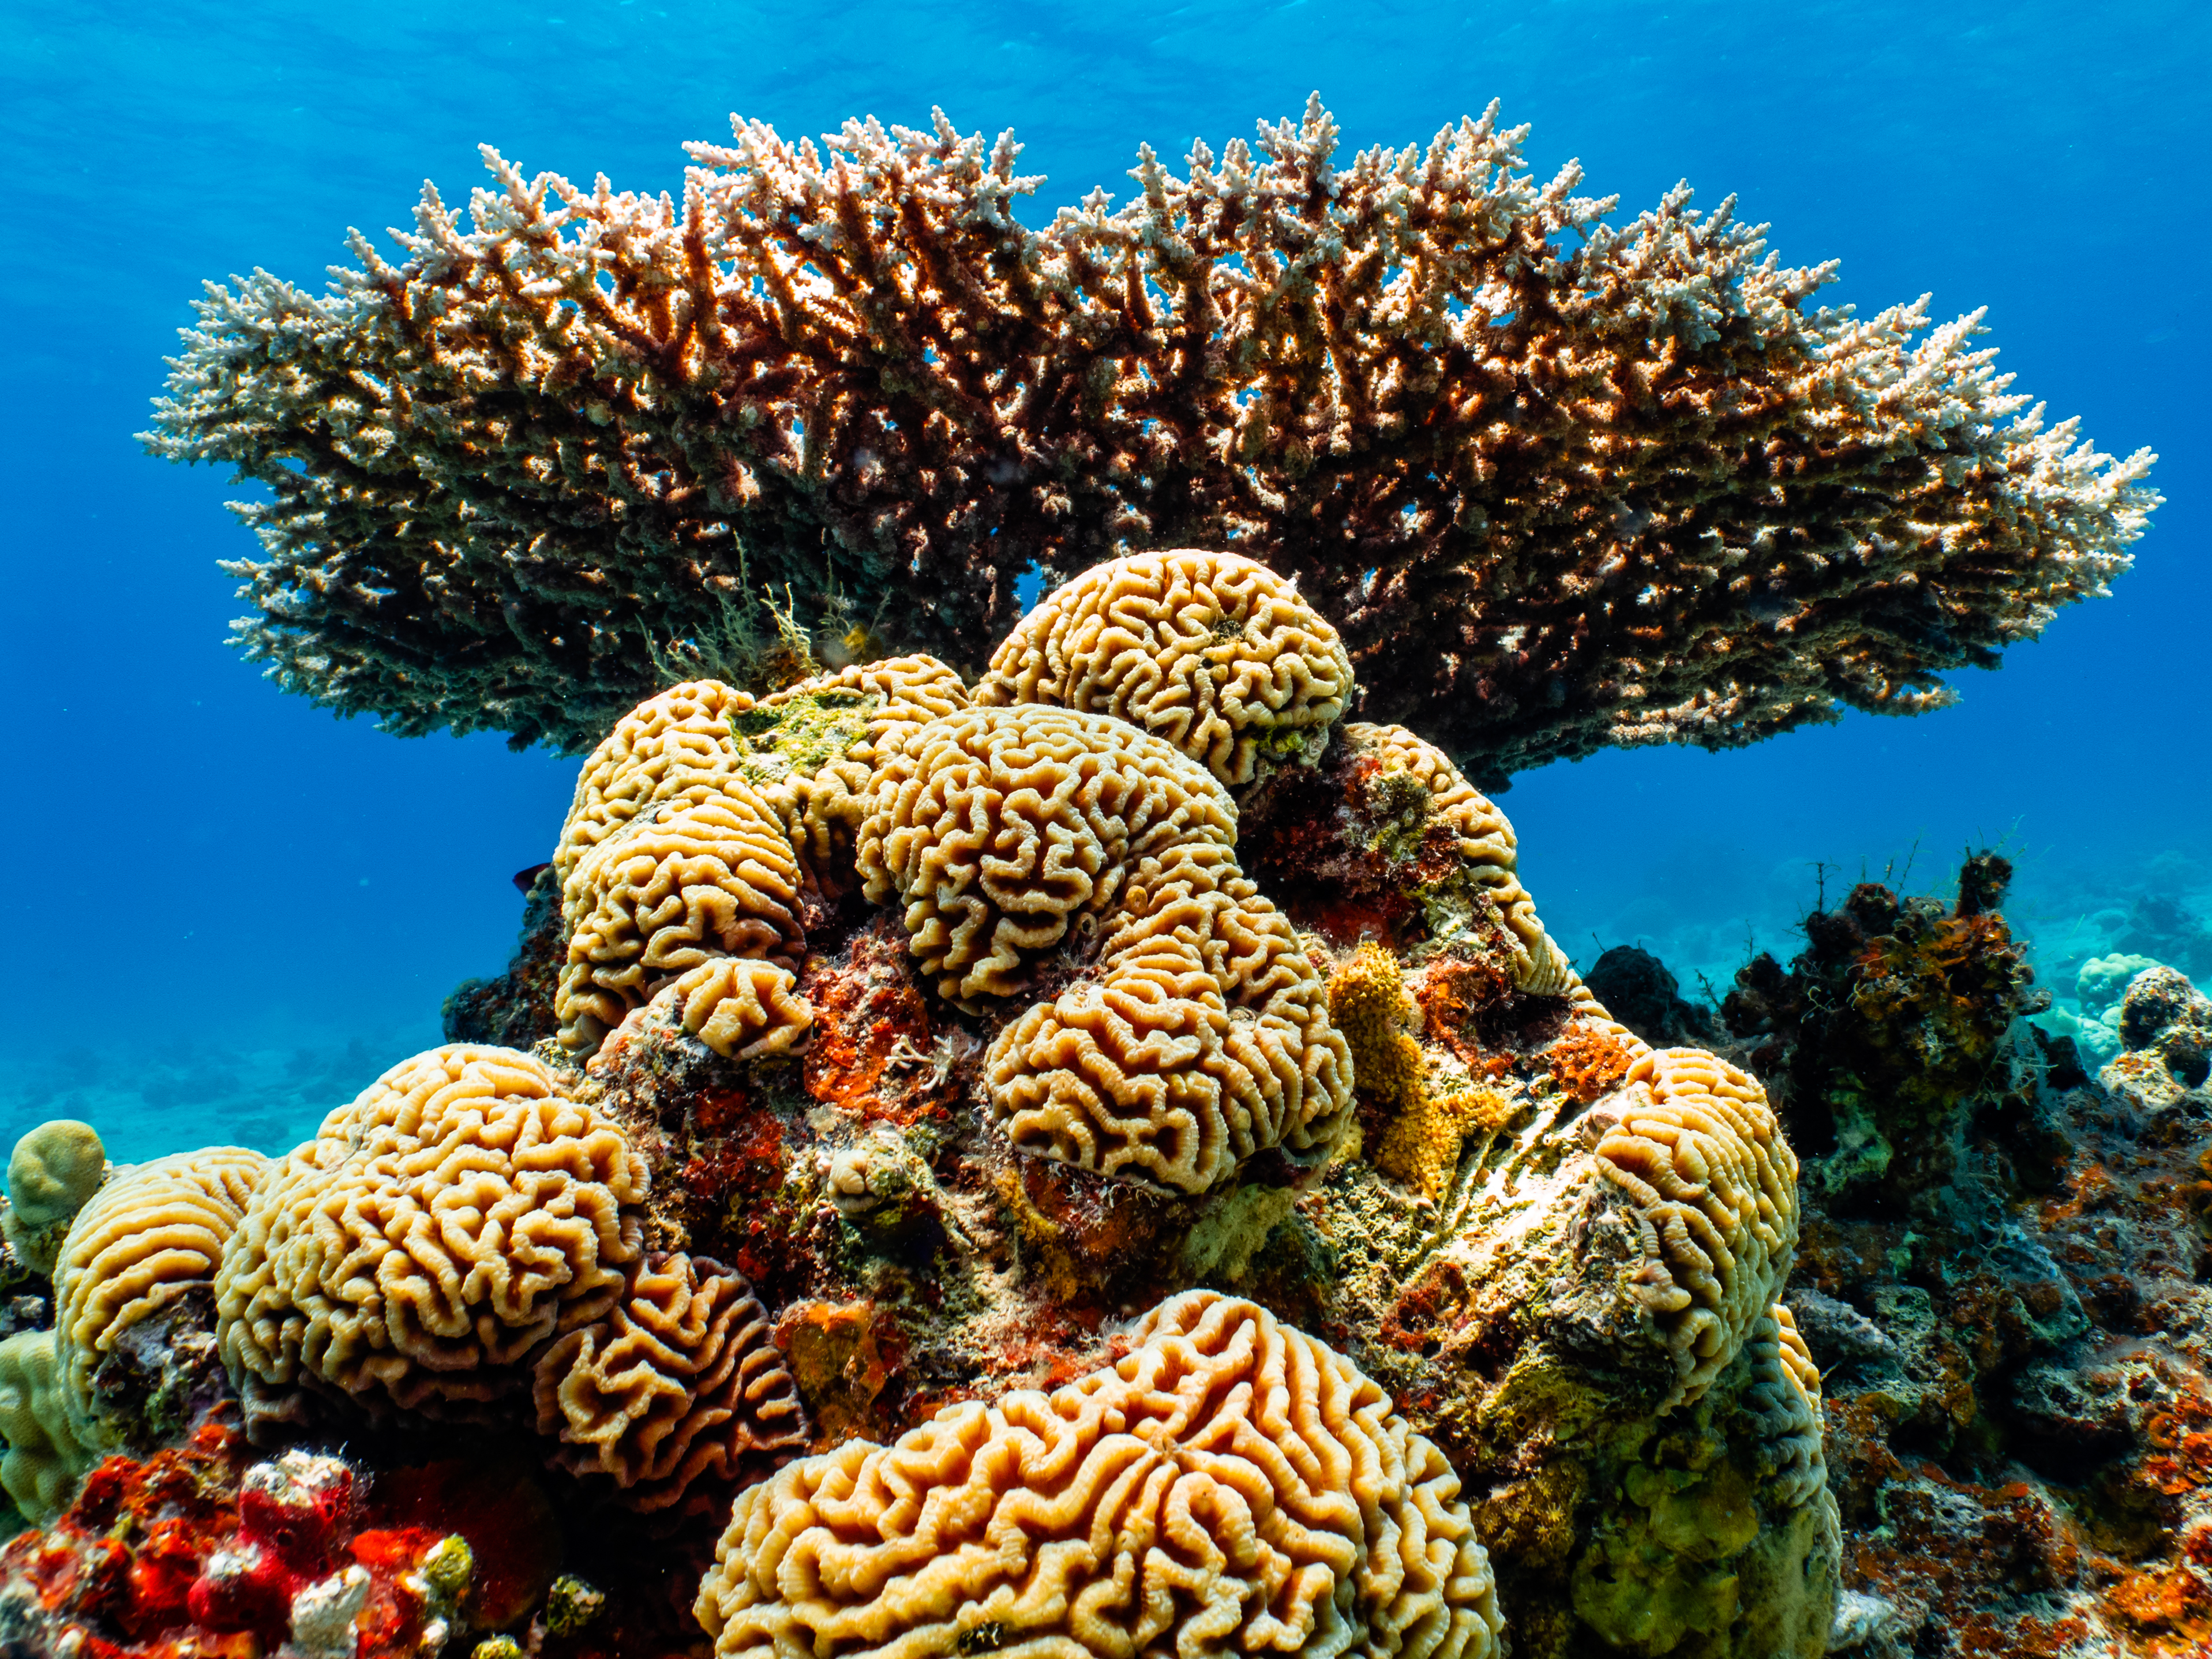 Red Sea 'super corals' resistant to rising ocean temperatures - in pictures